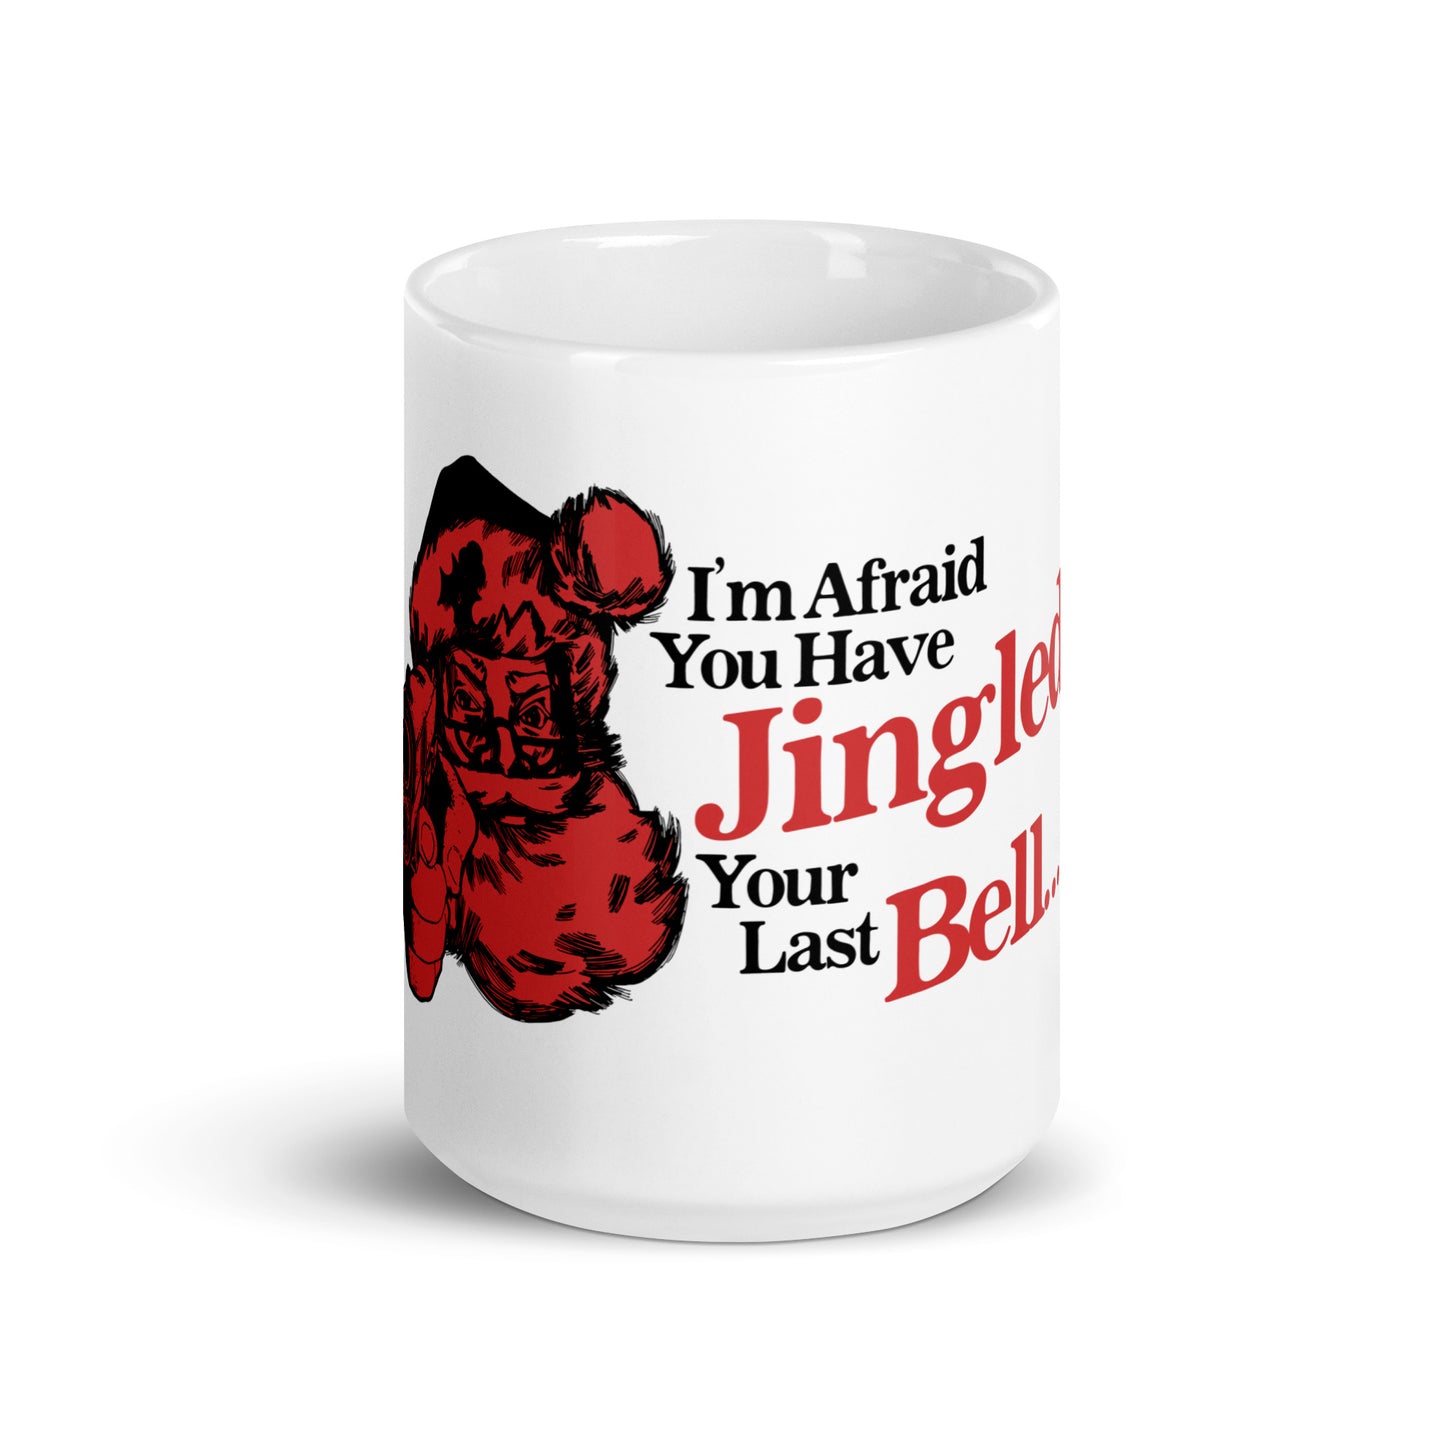 You've Jingled Your Last Bell mug